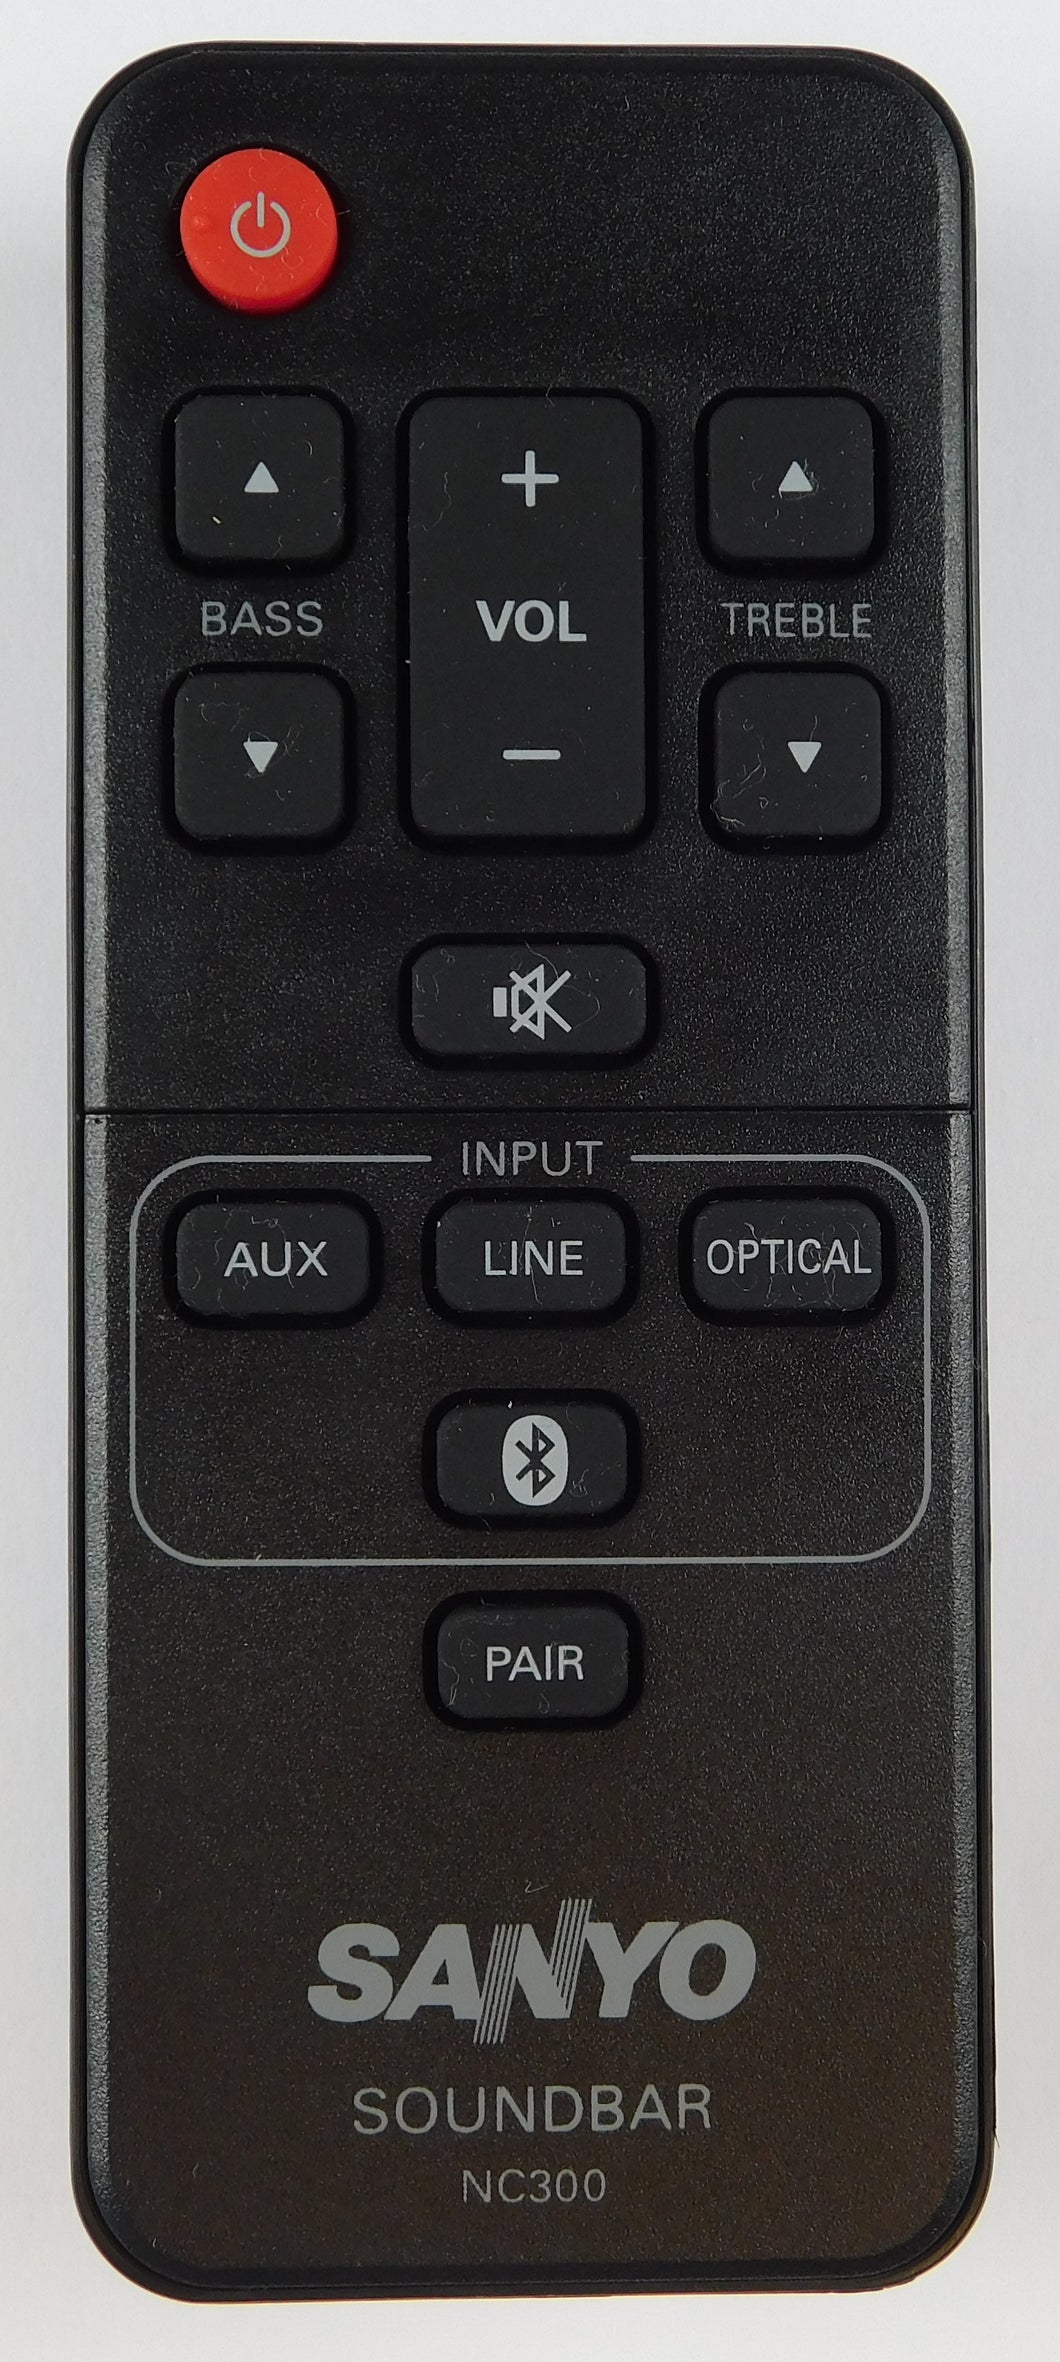 OEM replacement remote control for Sanyo Soundbar NC300UH